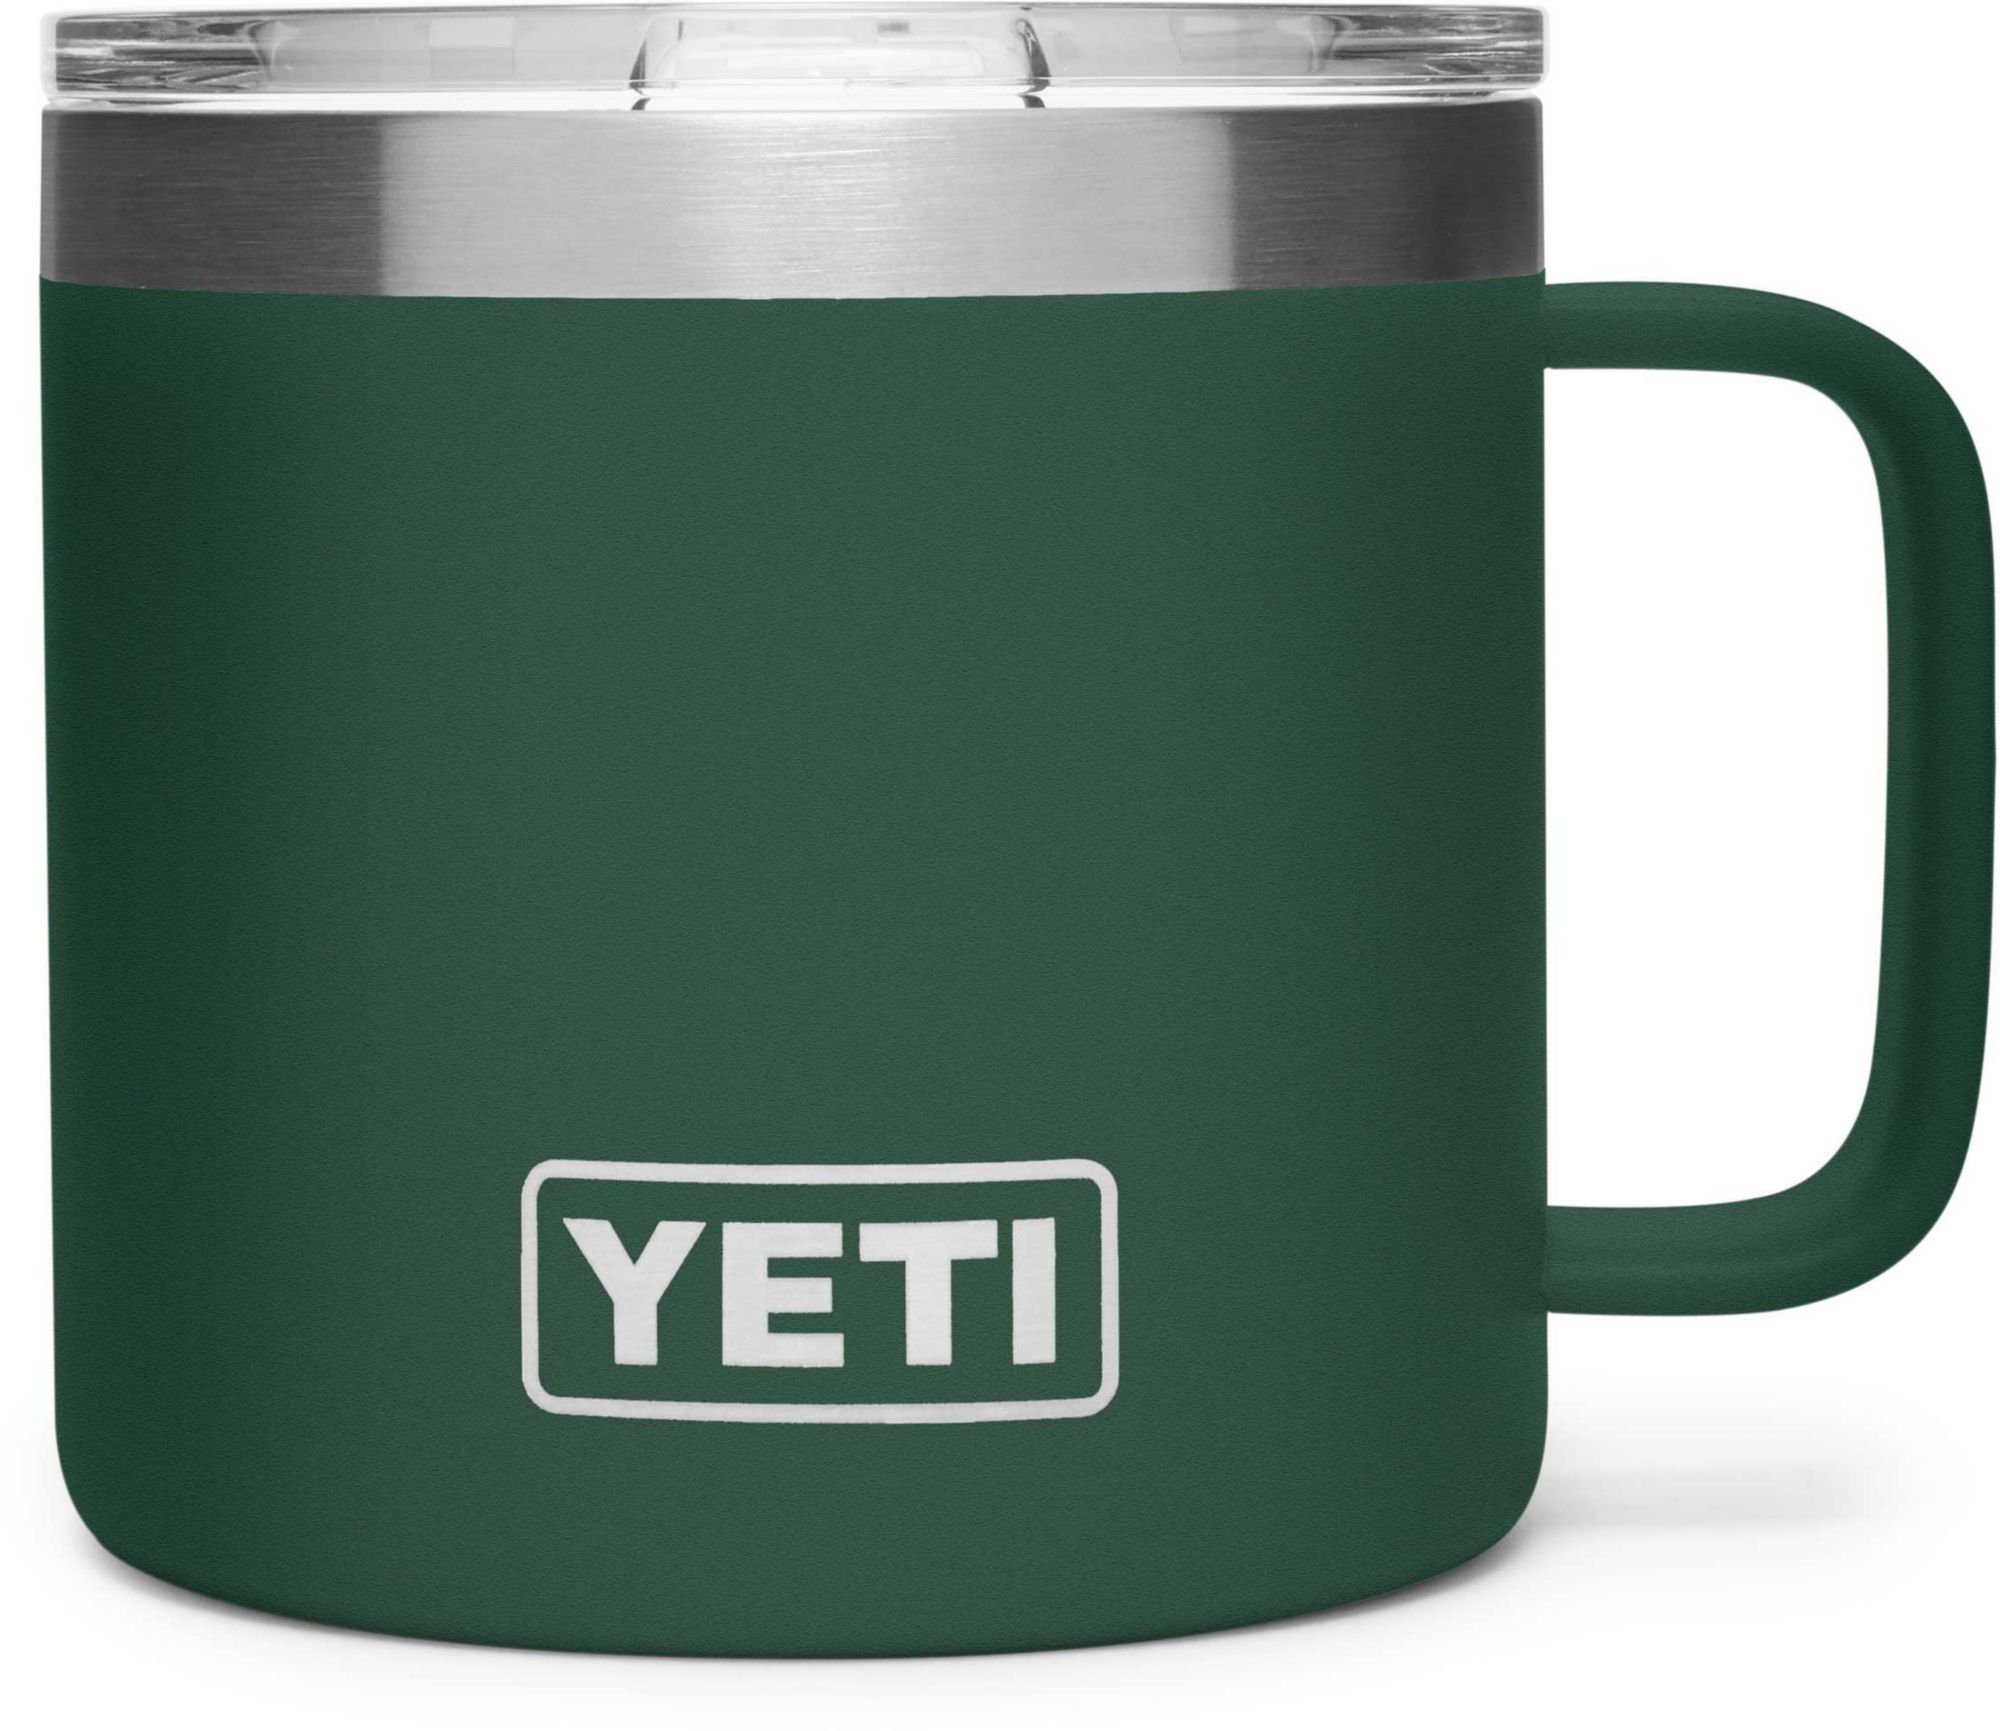 yeti large cup